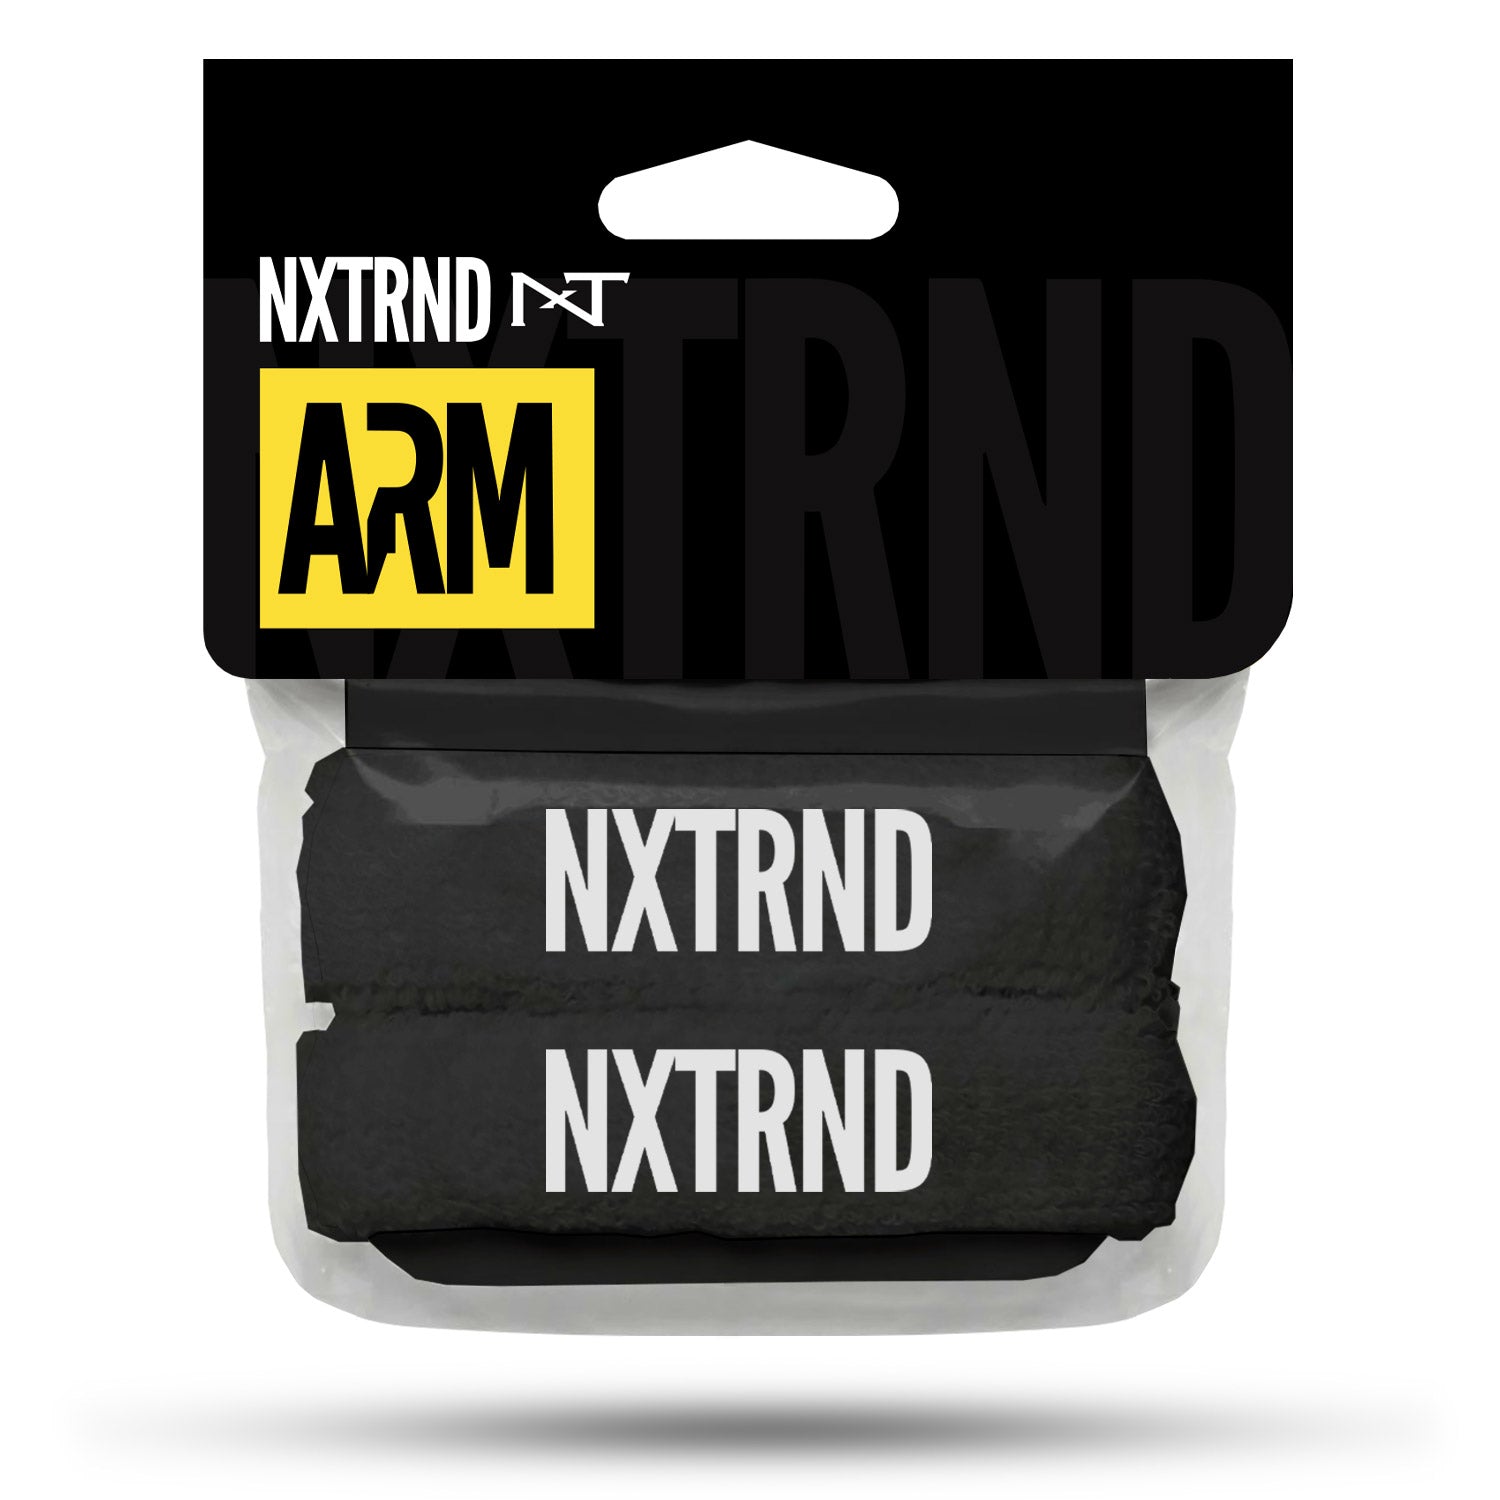 NXTRND Arm Bands Black (1 Pair)